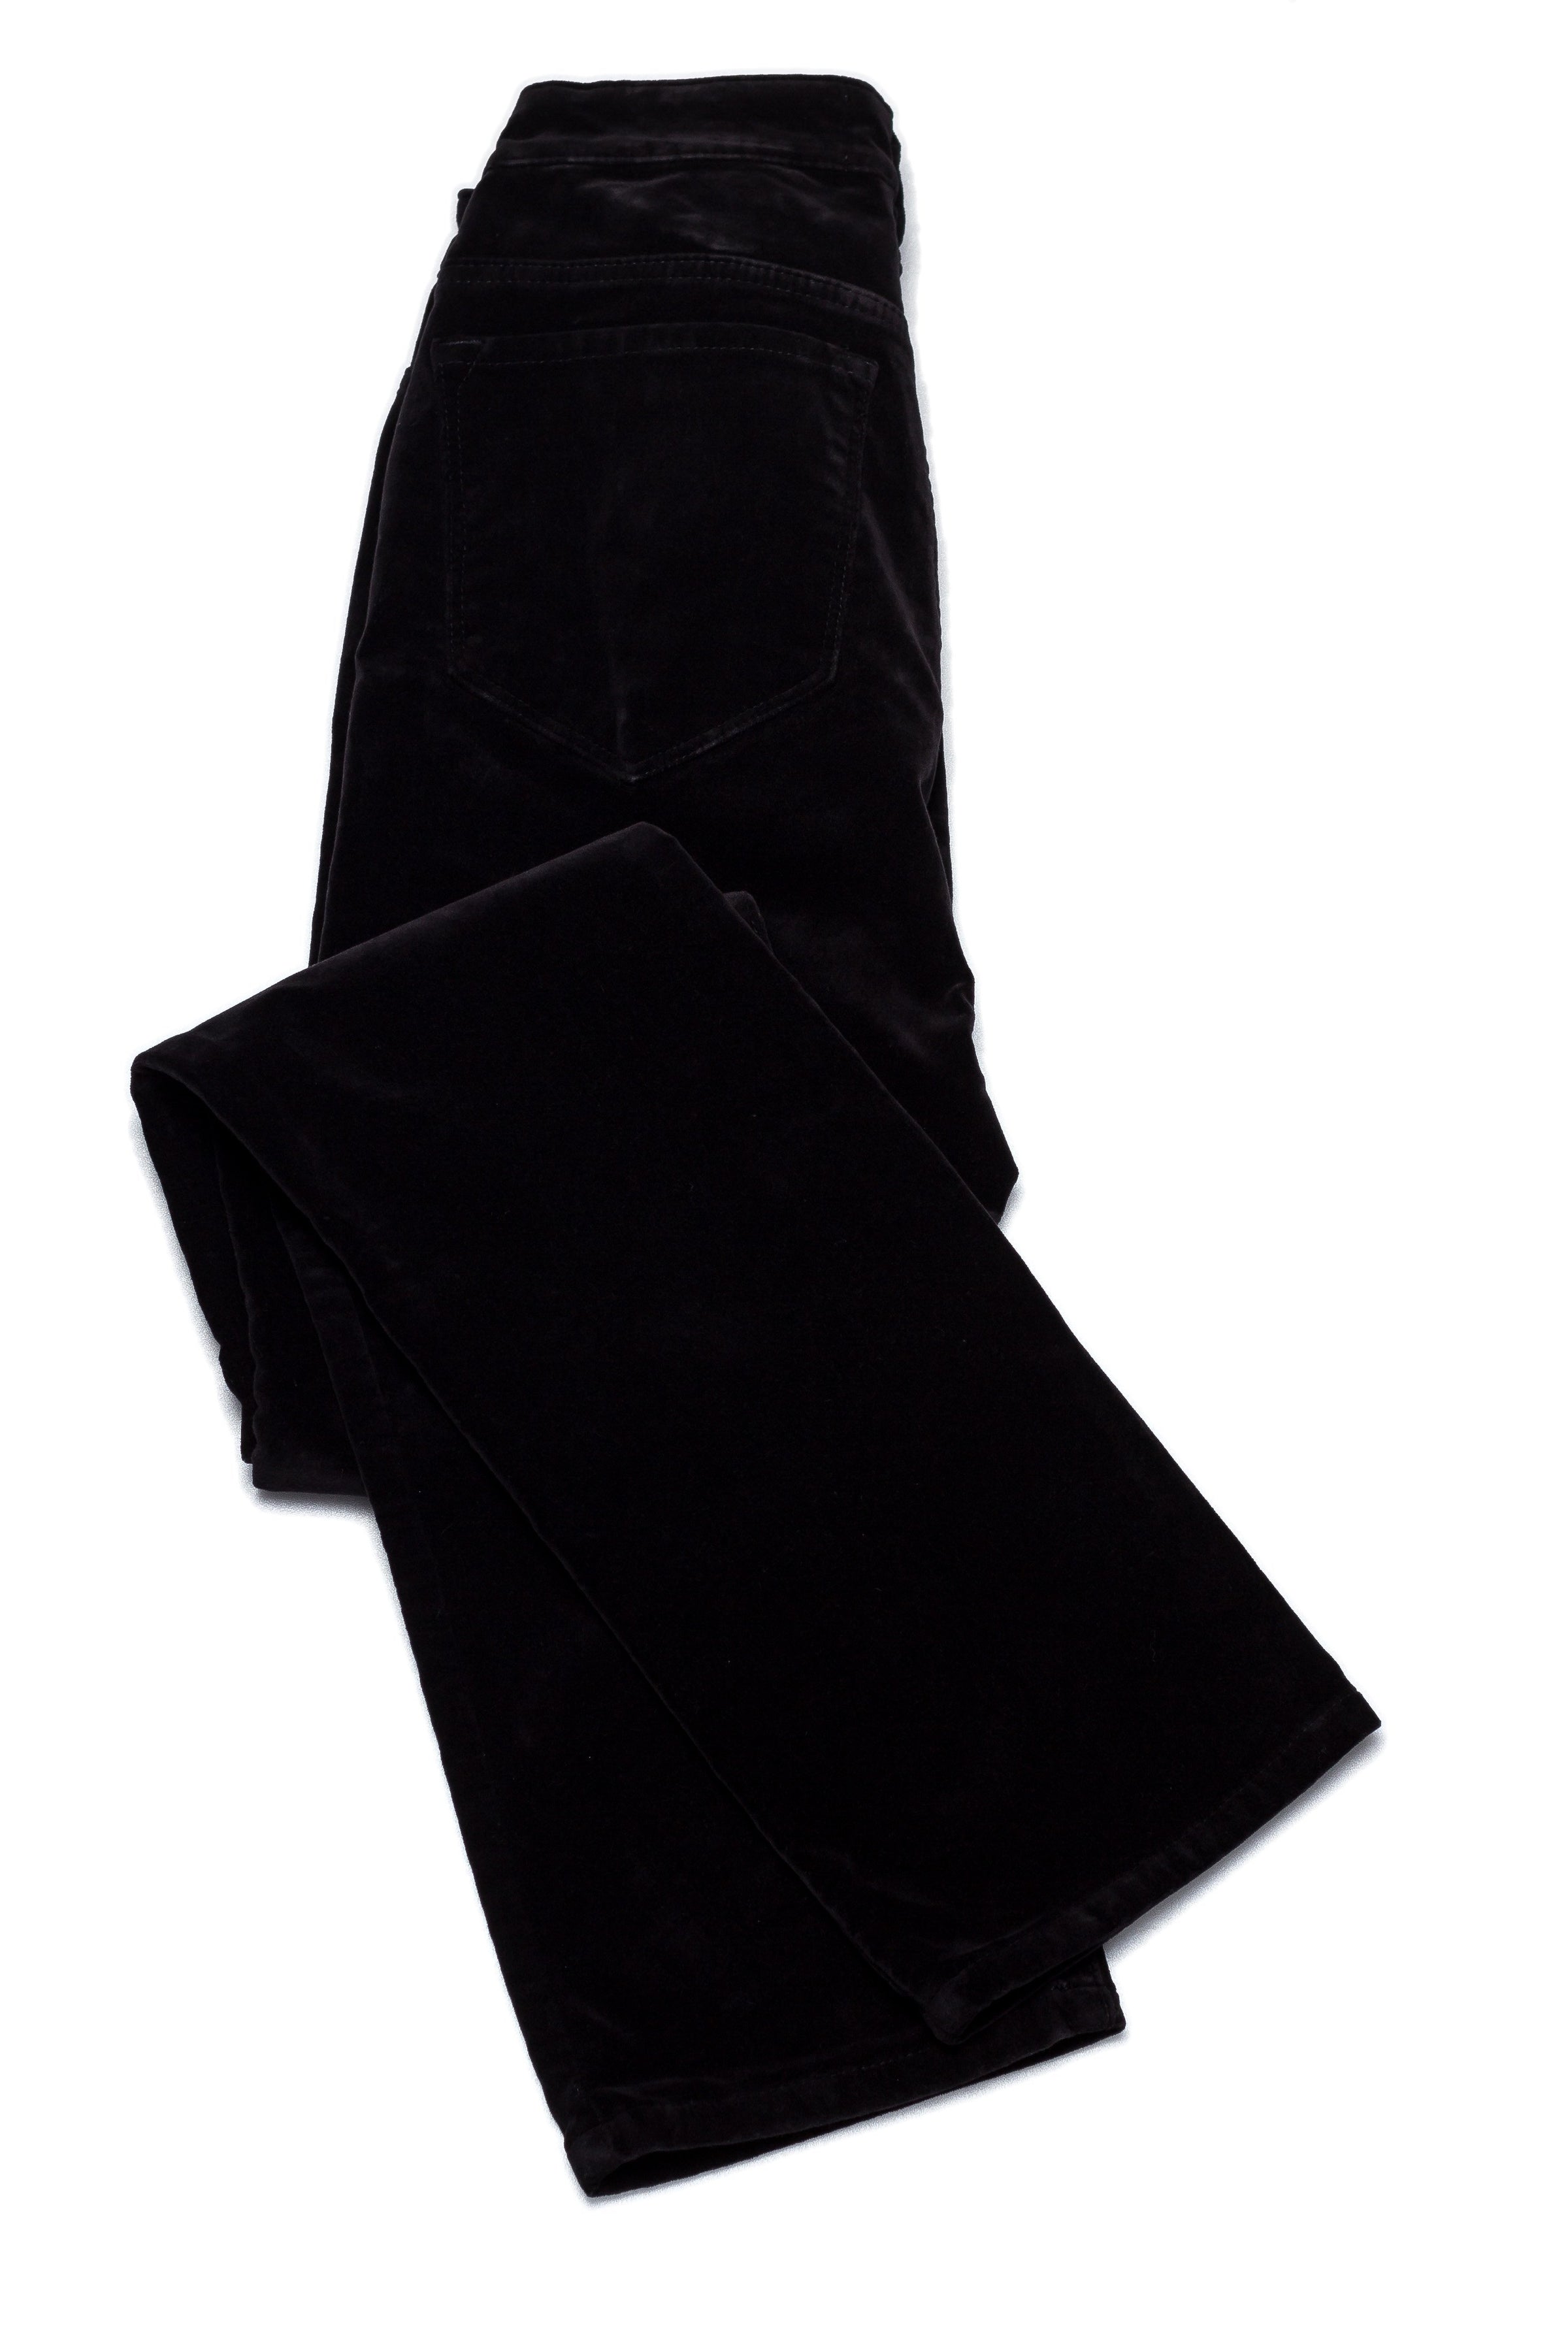 Pantalon Femme Confort Velours Ras Noir